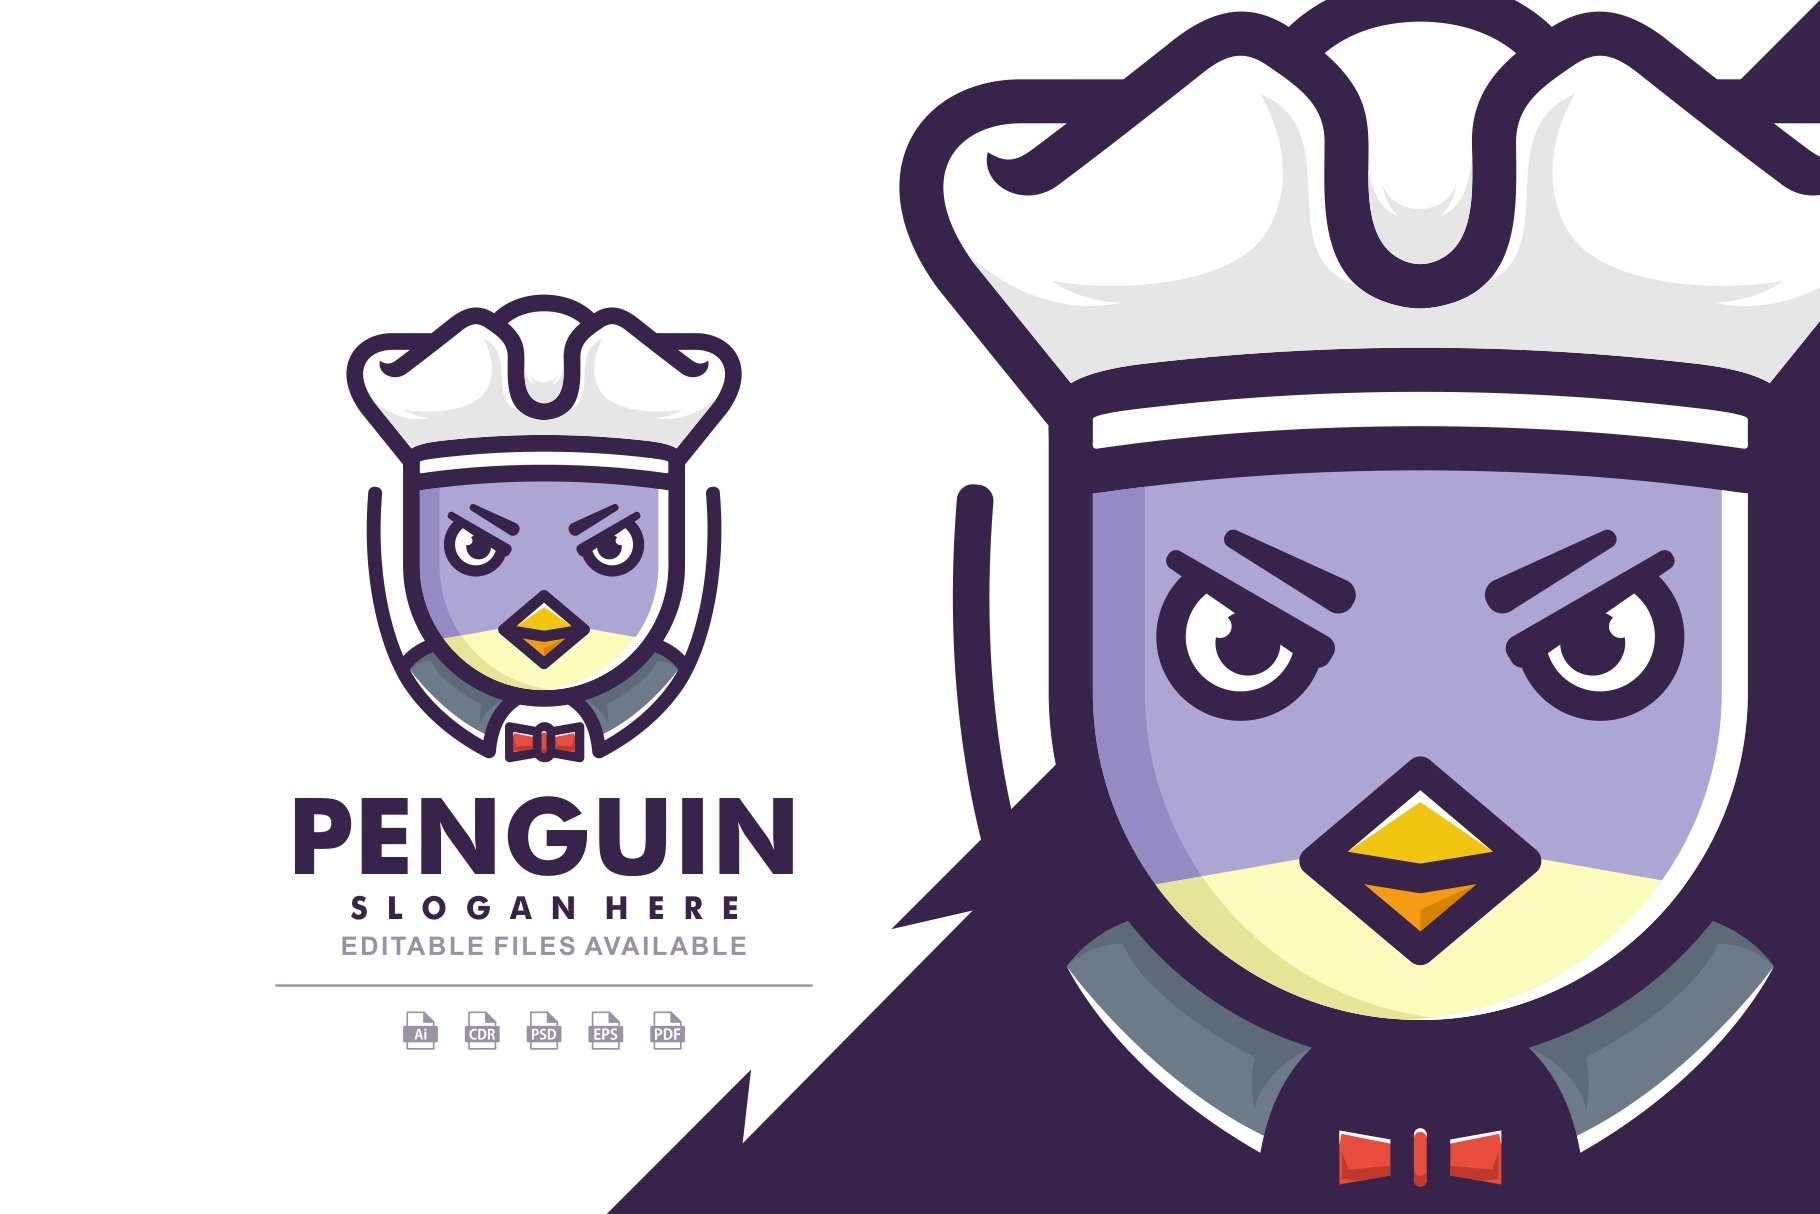 Penguin Captain Cartoon Logo cover image.